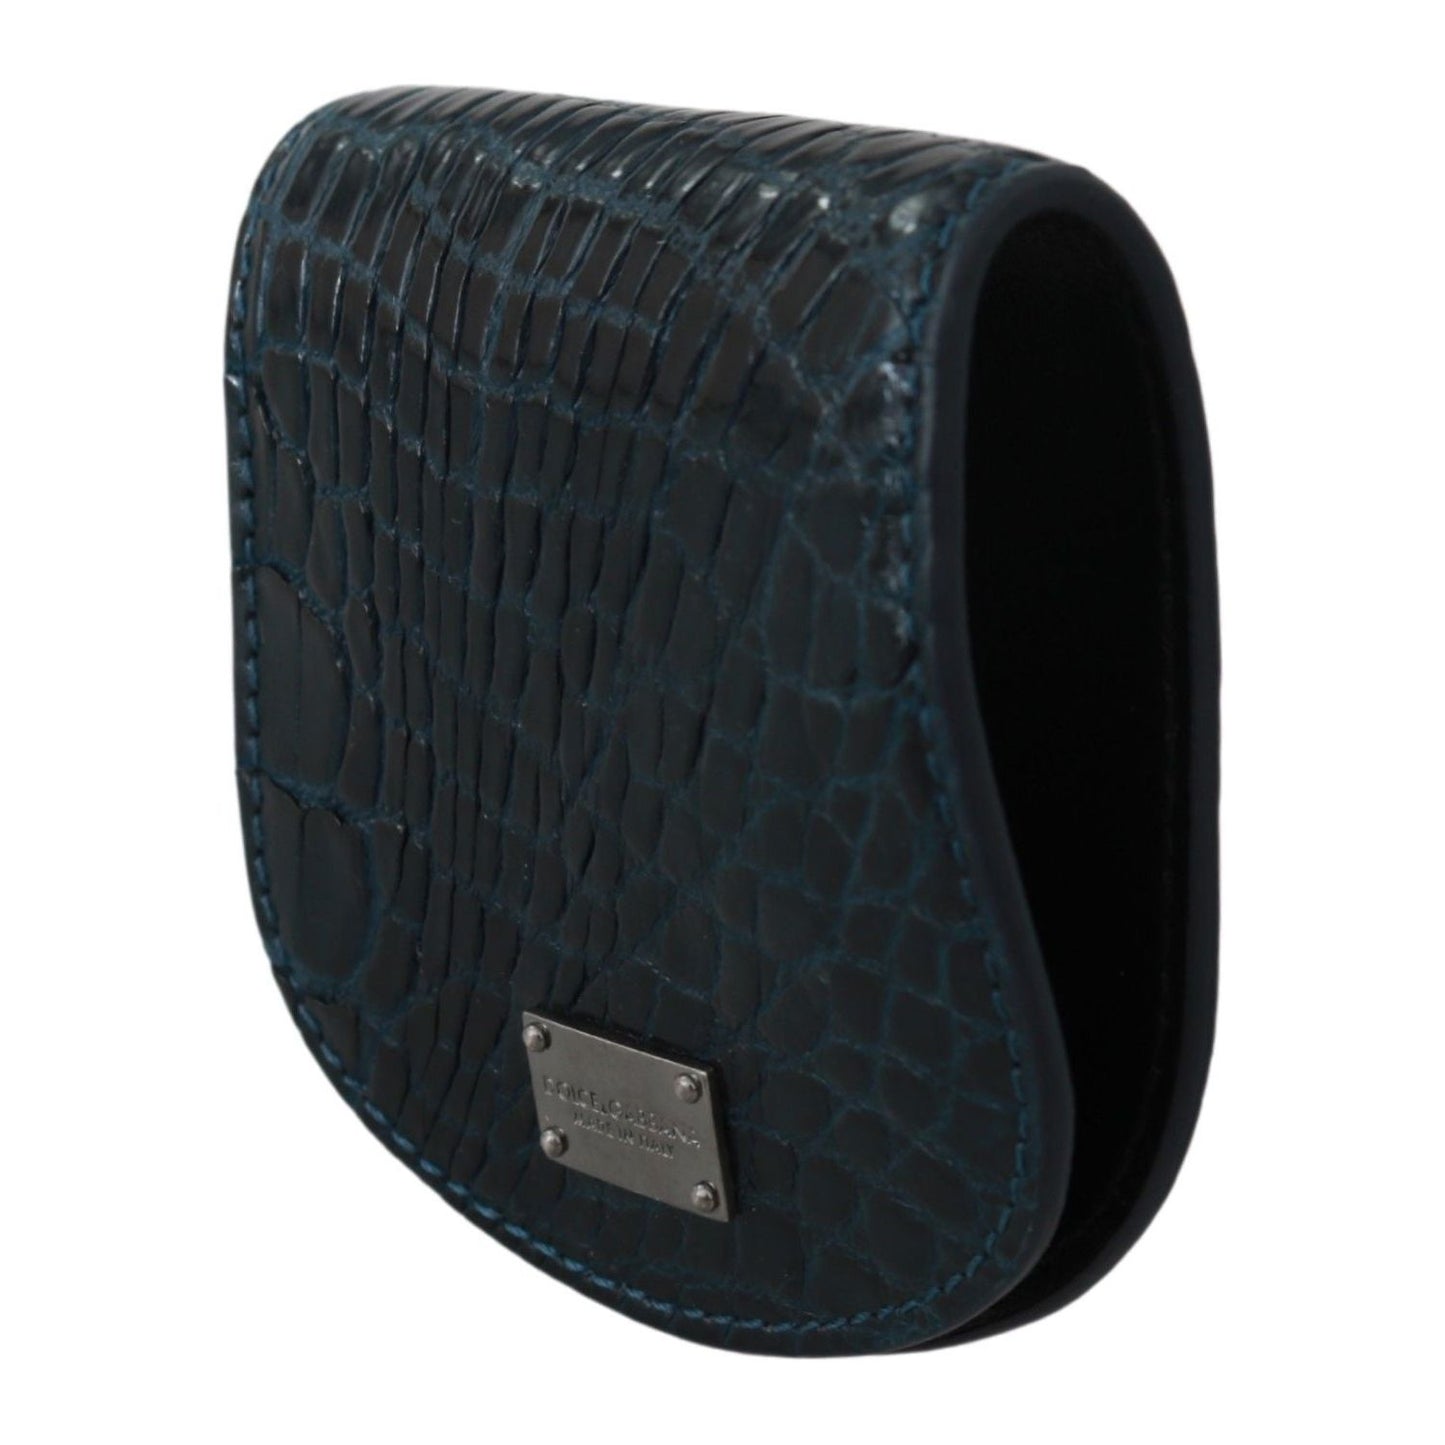 Dolce & Gabbana Exquisite Dark Blue Coin Case Wallet Condom Case blue-exotic-skins-condom-case-holder-pocket IMG_0248-4e861589-7a4.jpg